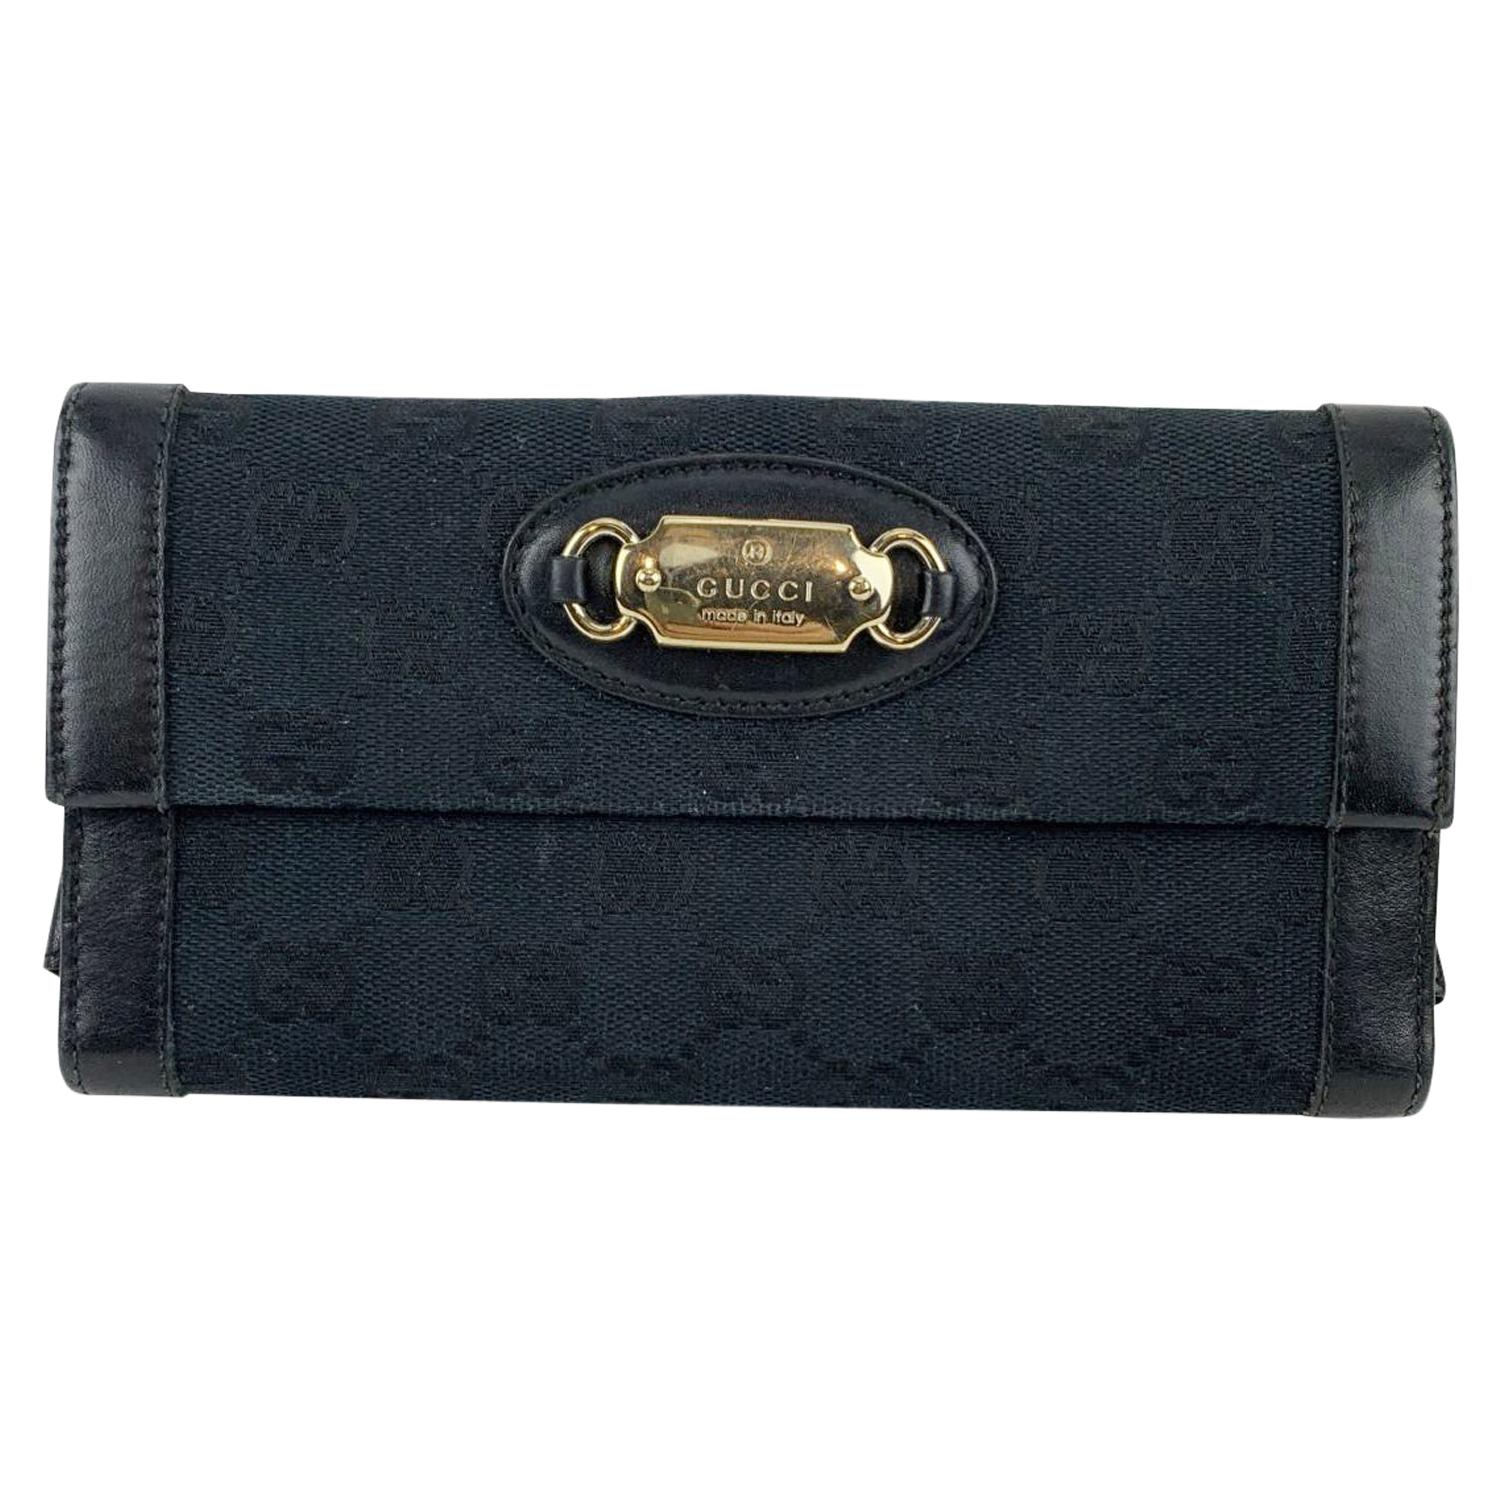 Gucci Black Monogram Canvas Leather Punch Continental Wallet Purse